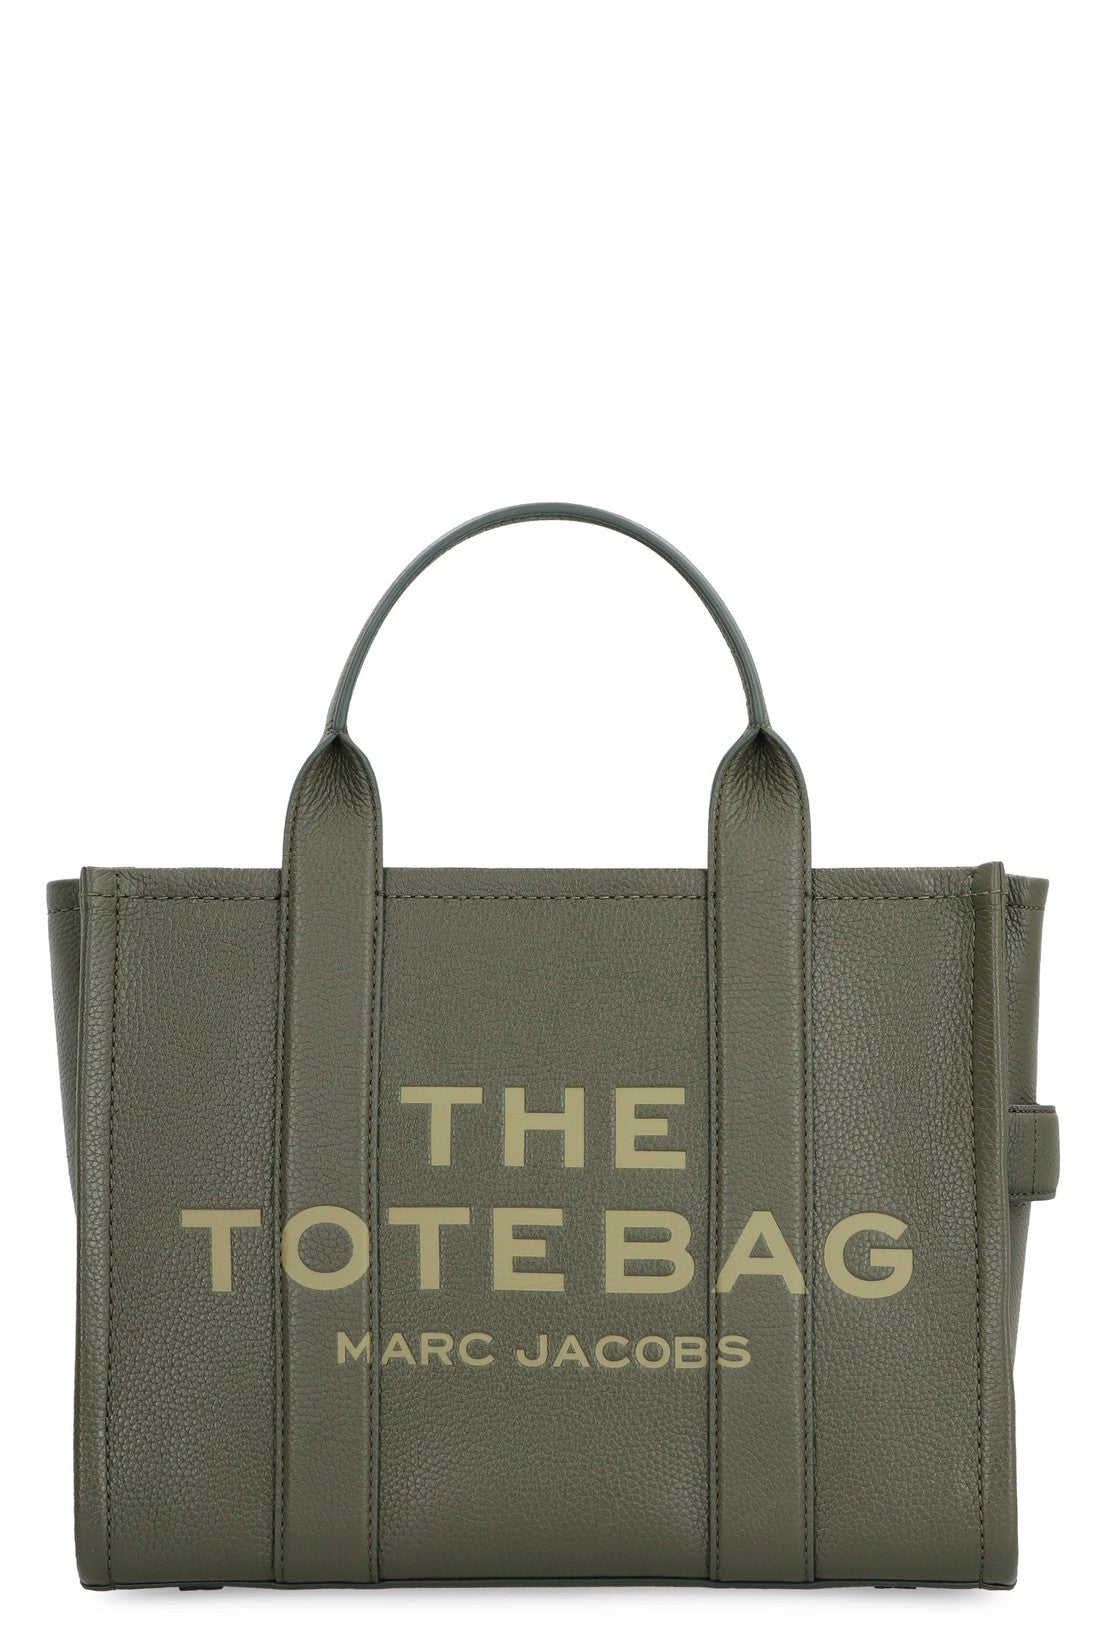 Marc Jacobs-OUTLET-SALE-The Tote Bag leather bag-ARCHIVIST